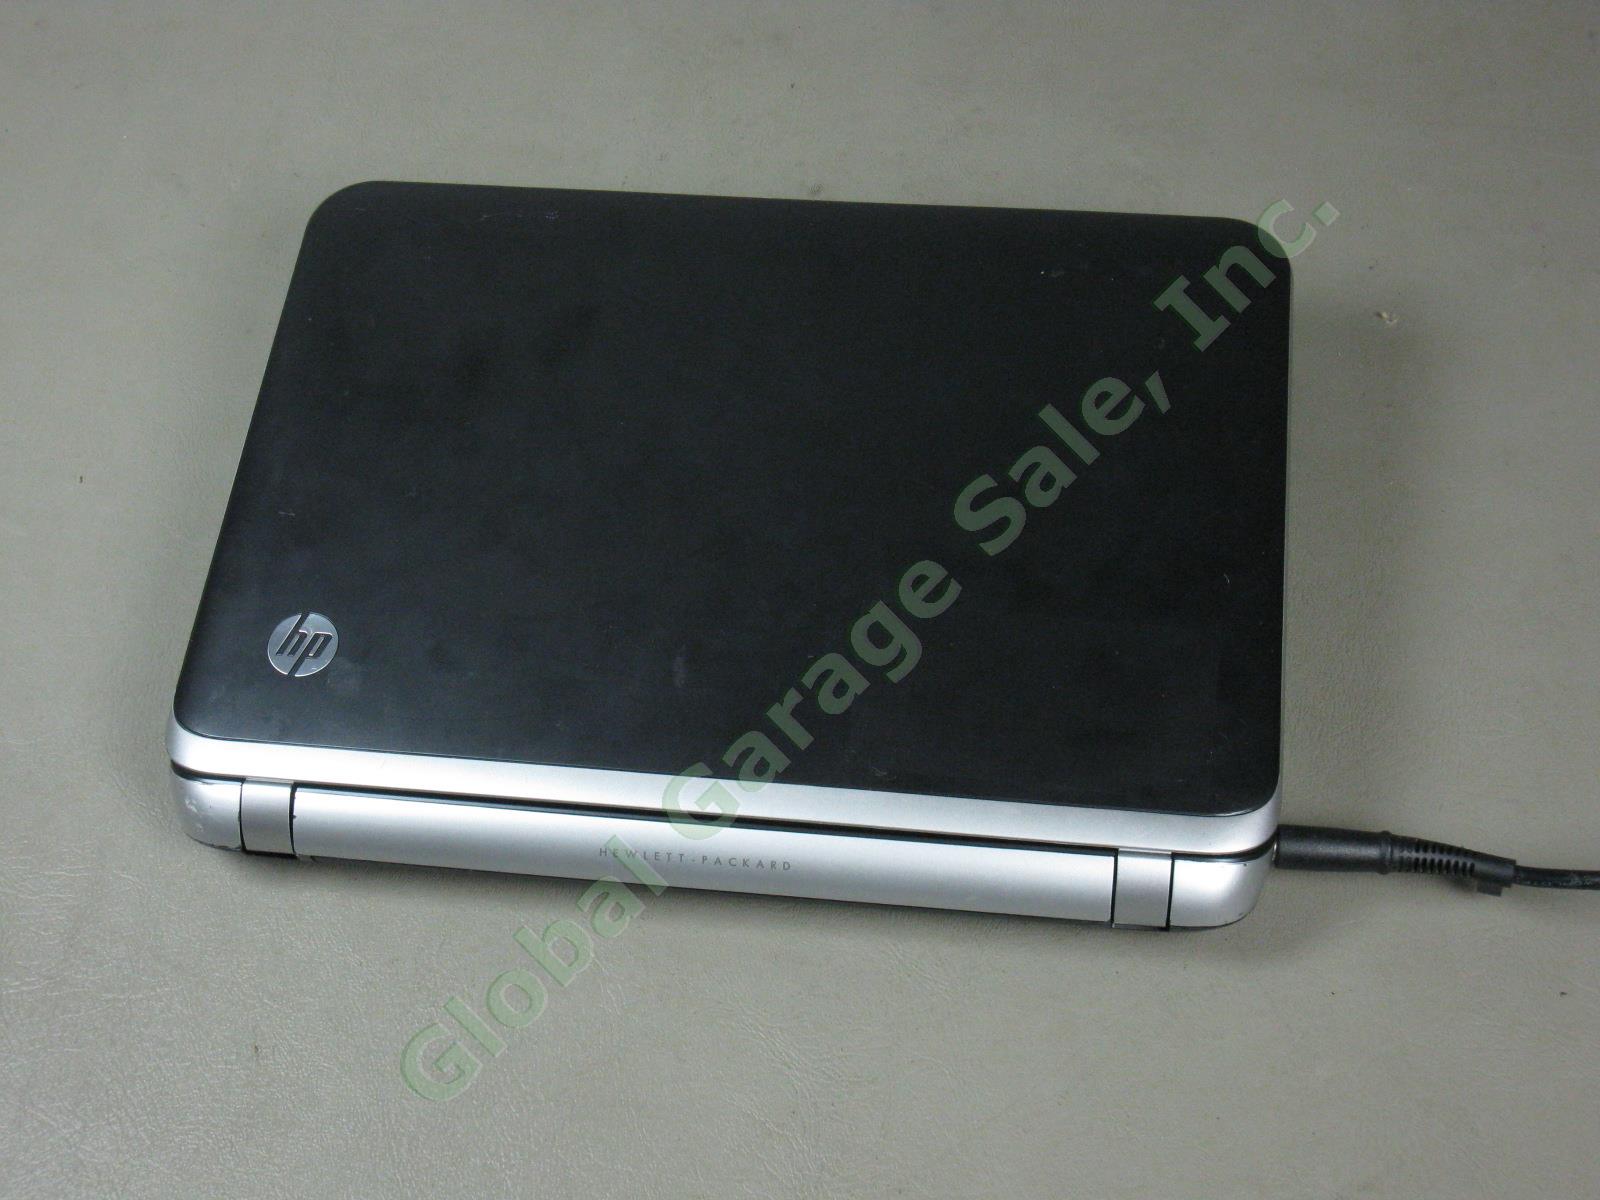 HP 3115m Notebook Laptop AMD E-450 1.65GHz 4GB RAM 320GB Windows 7 Ultimate NR! 3